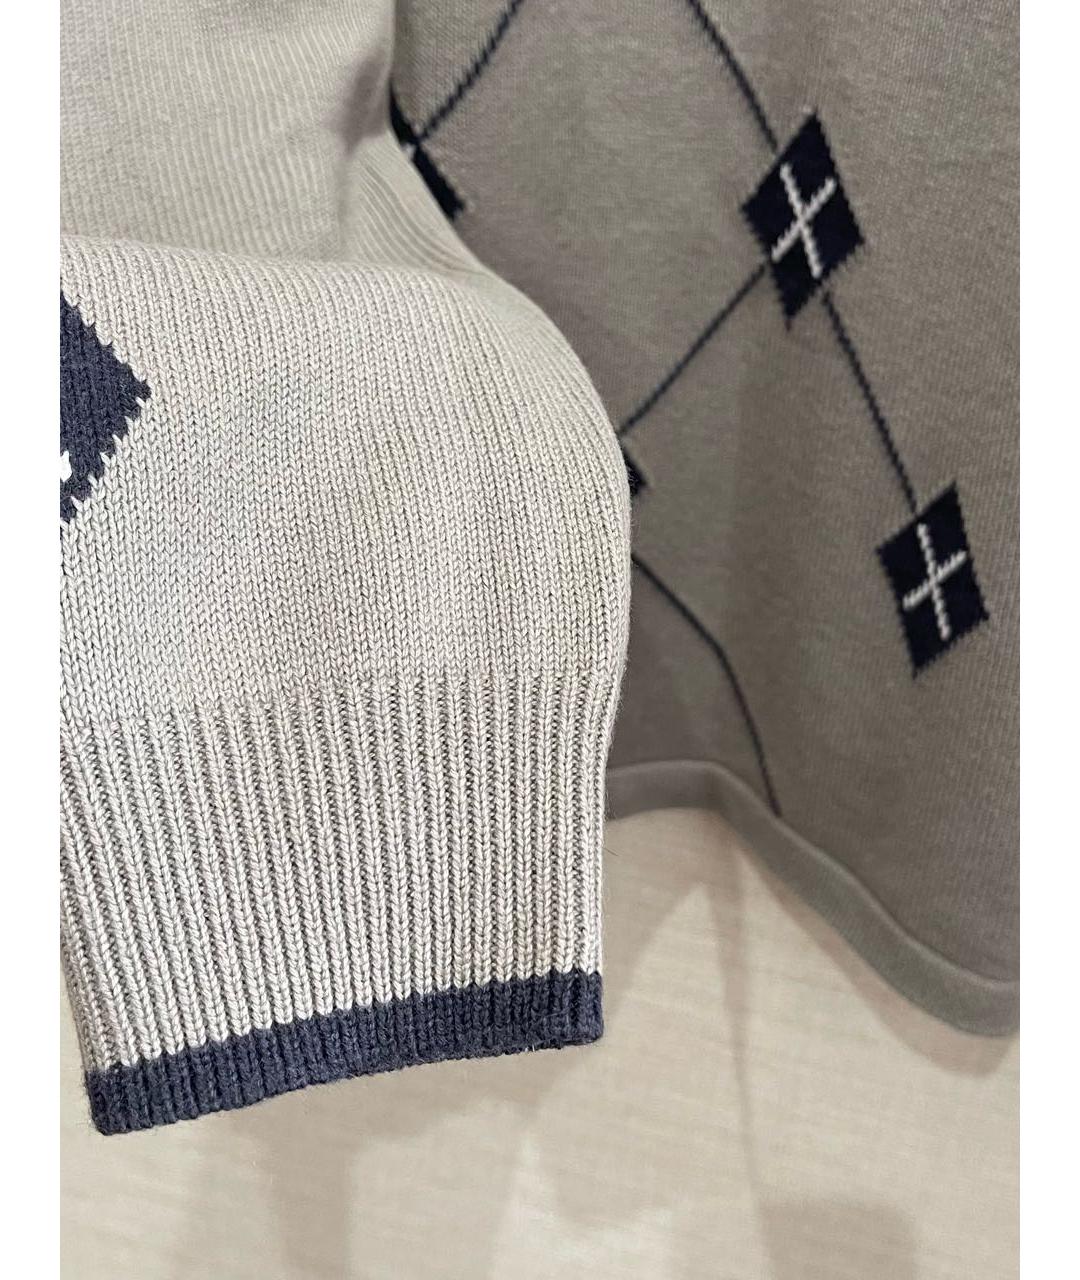 HERMES PRE-OWNED Серый кашемировый джемпер / свитер, фото 4